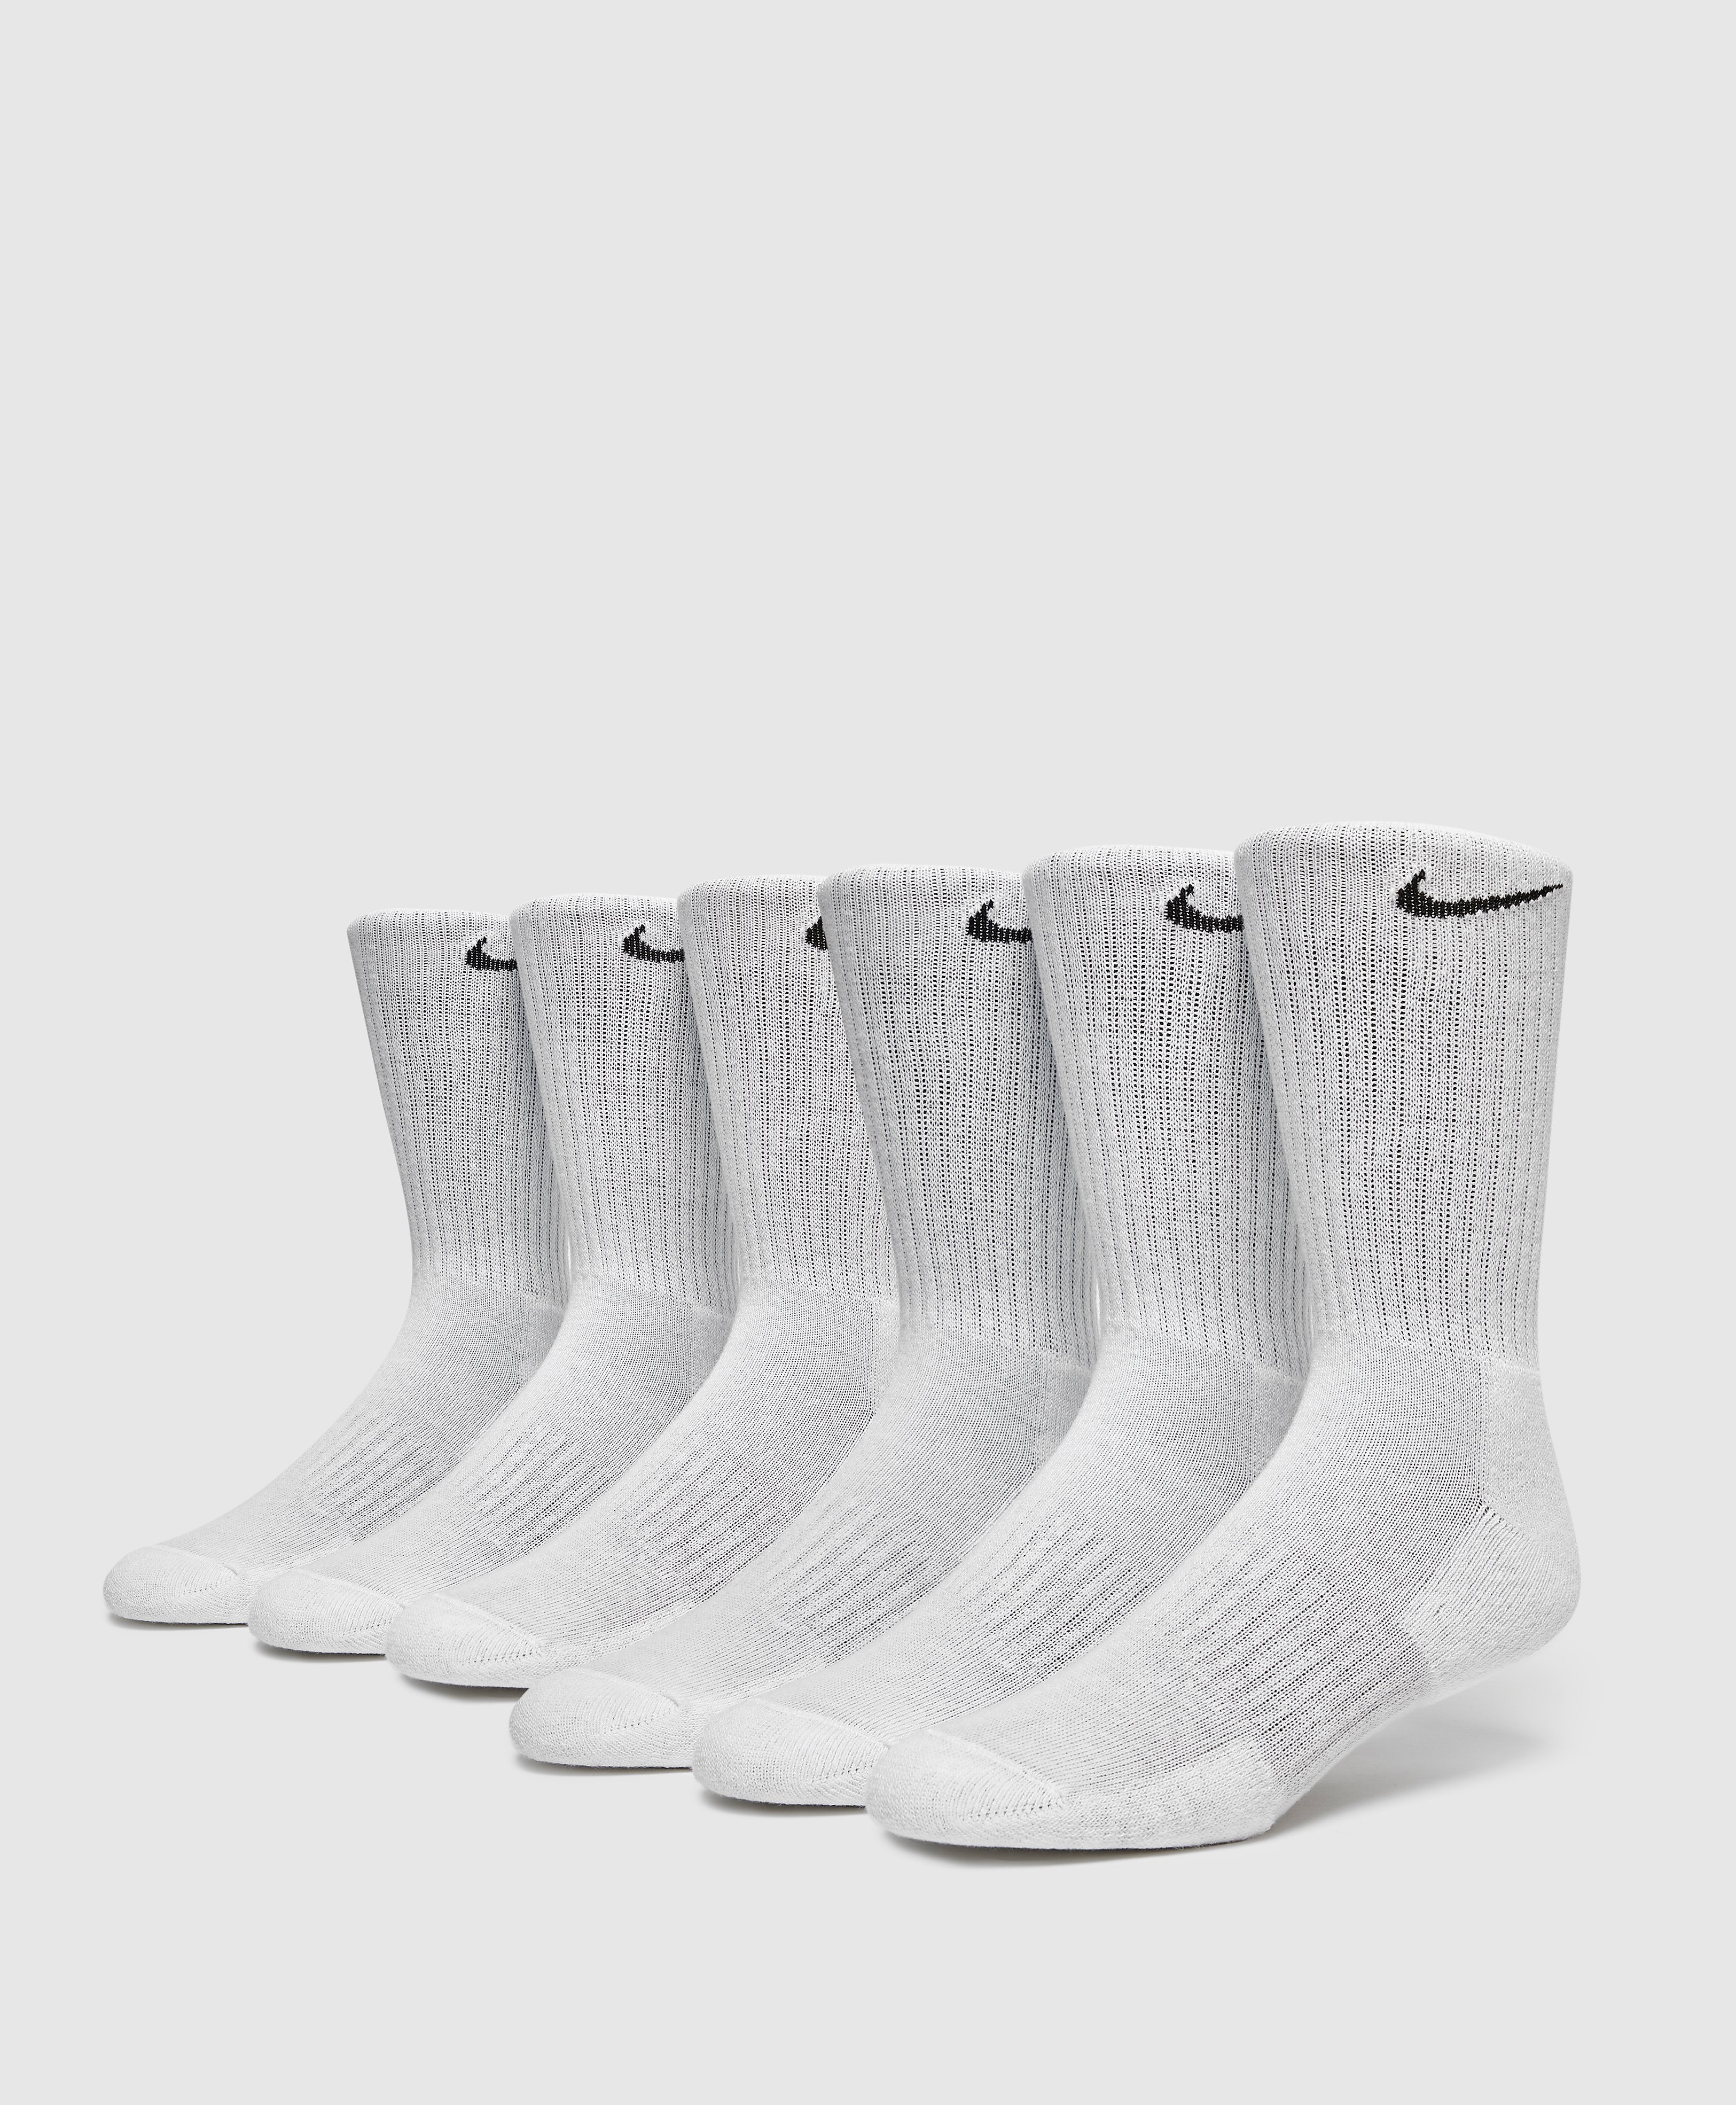 Nike Men's 6-Pack Everyday Cushioned Training Crew Socks - White/Black, White/Black